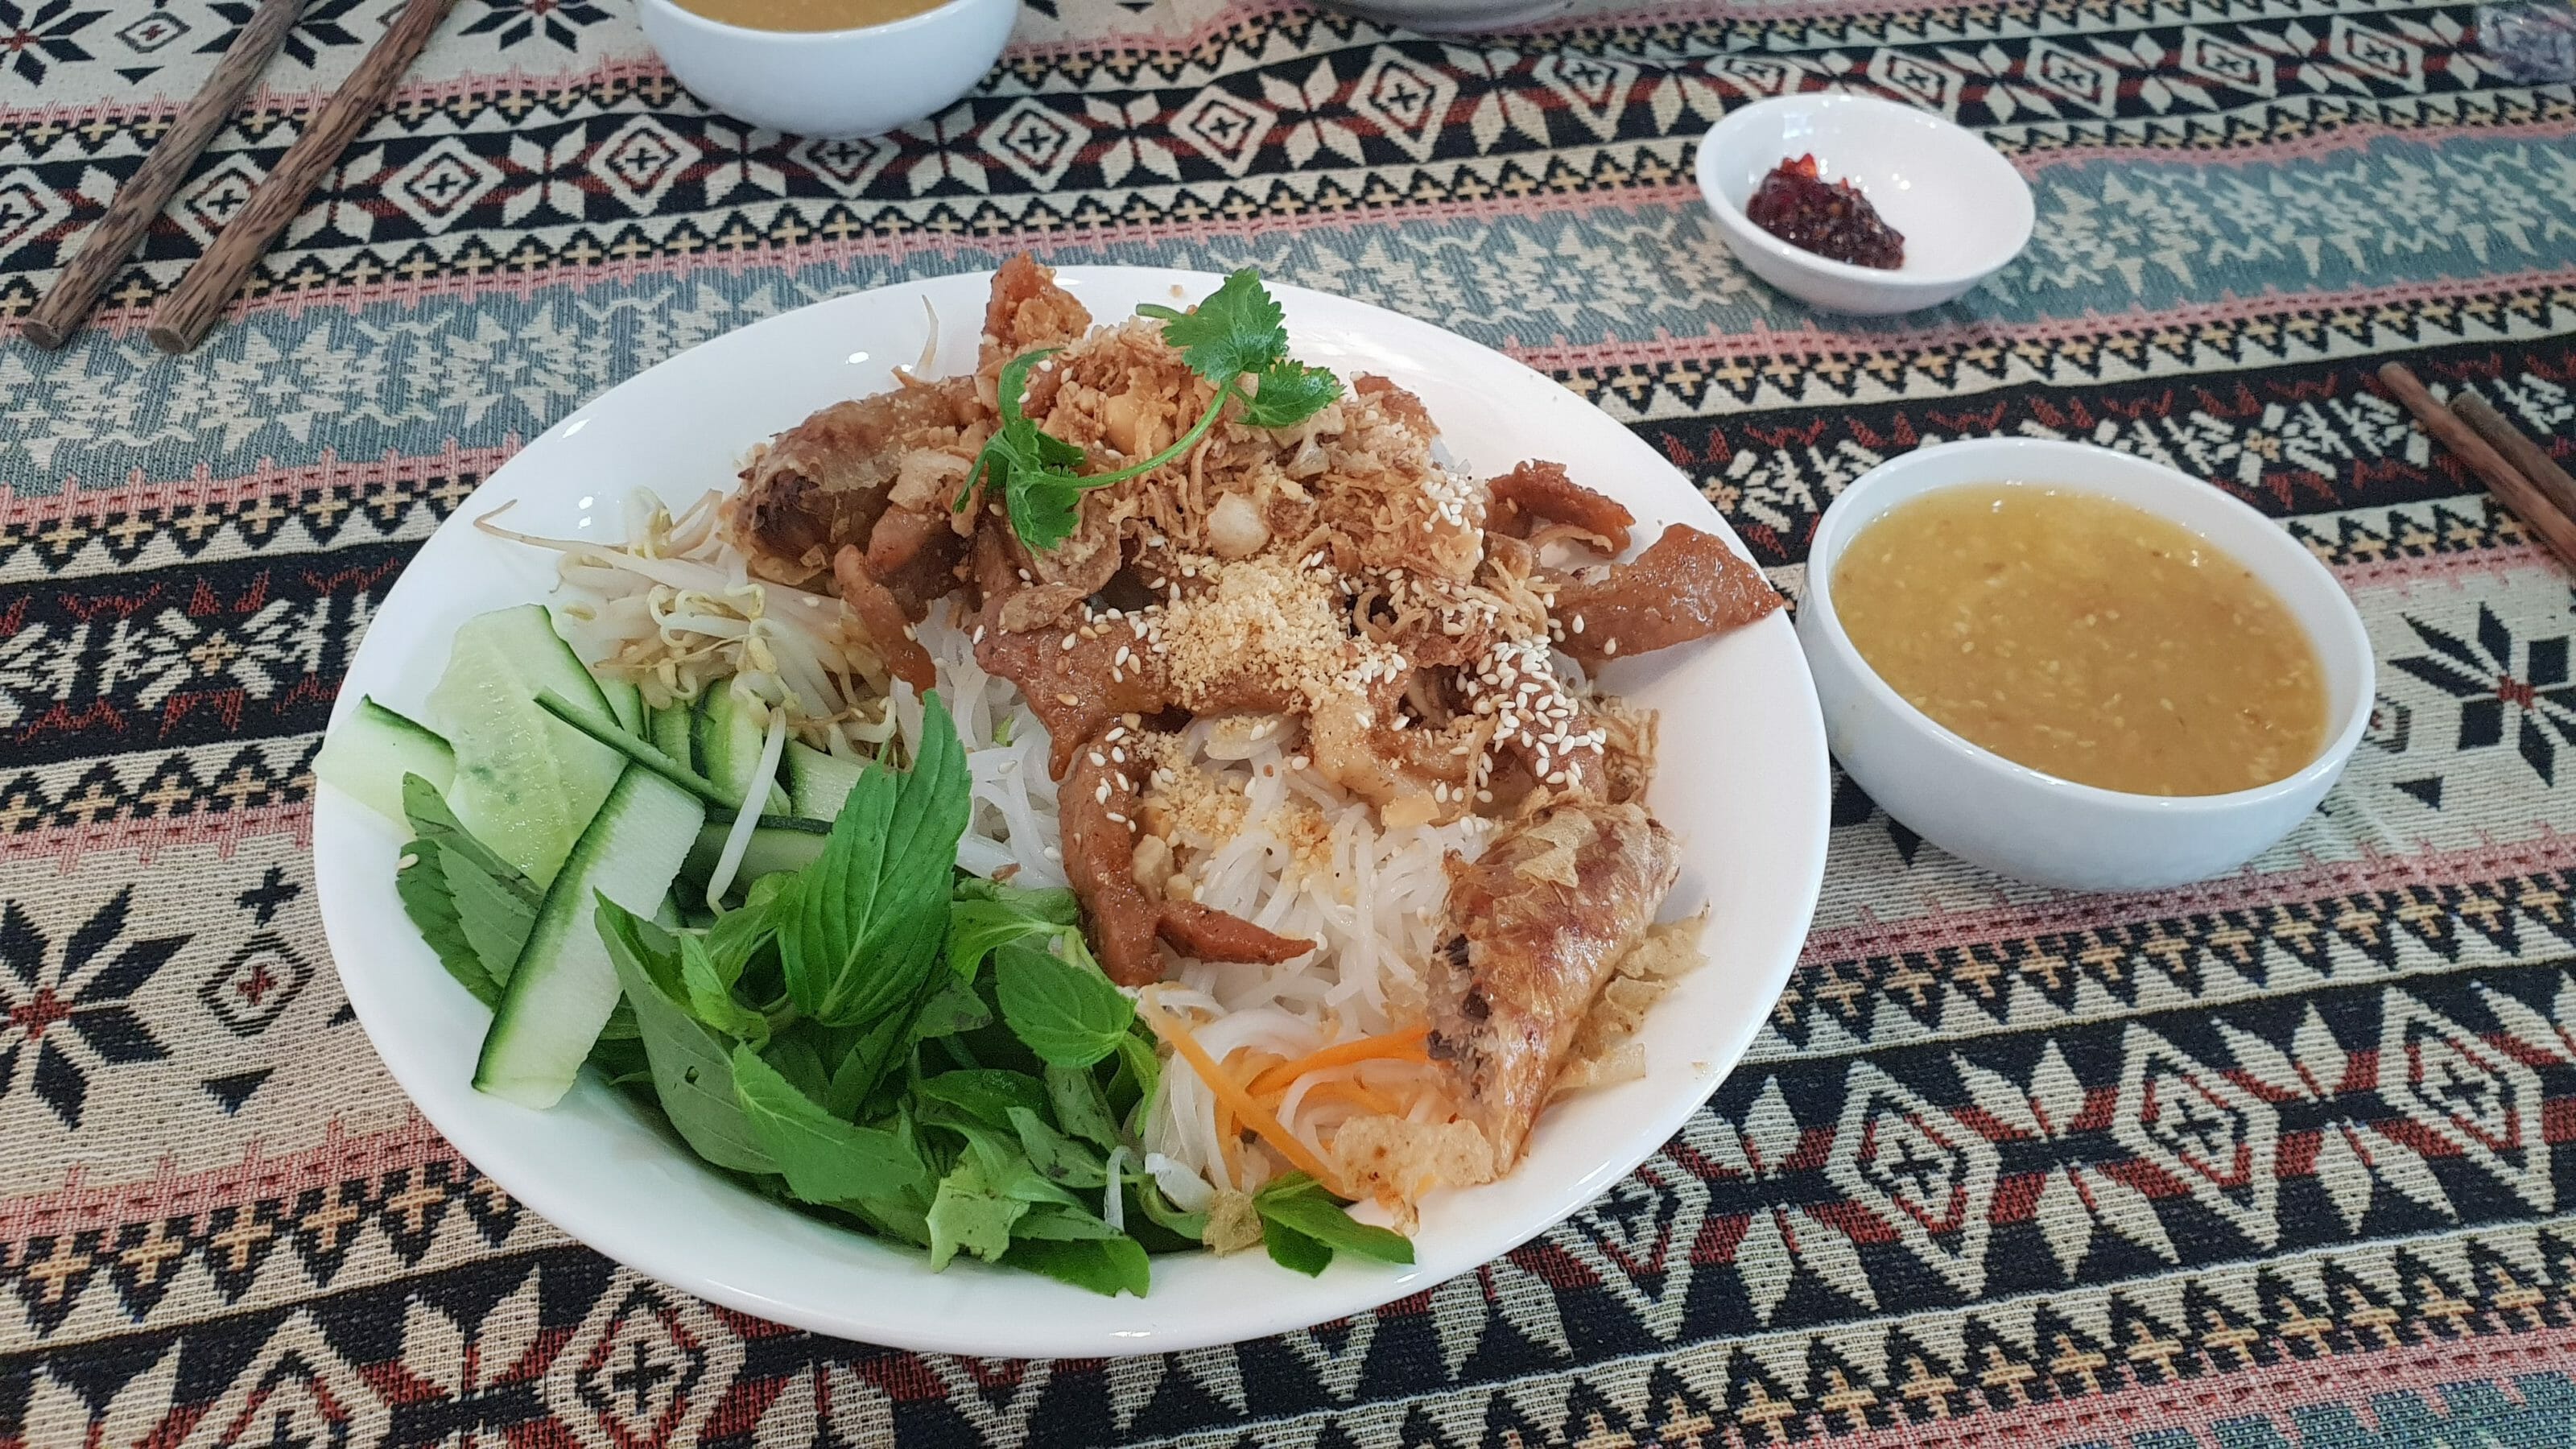 Thai food during a round the world trip